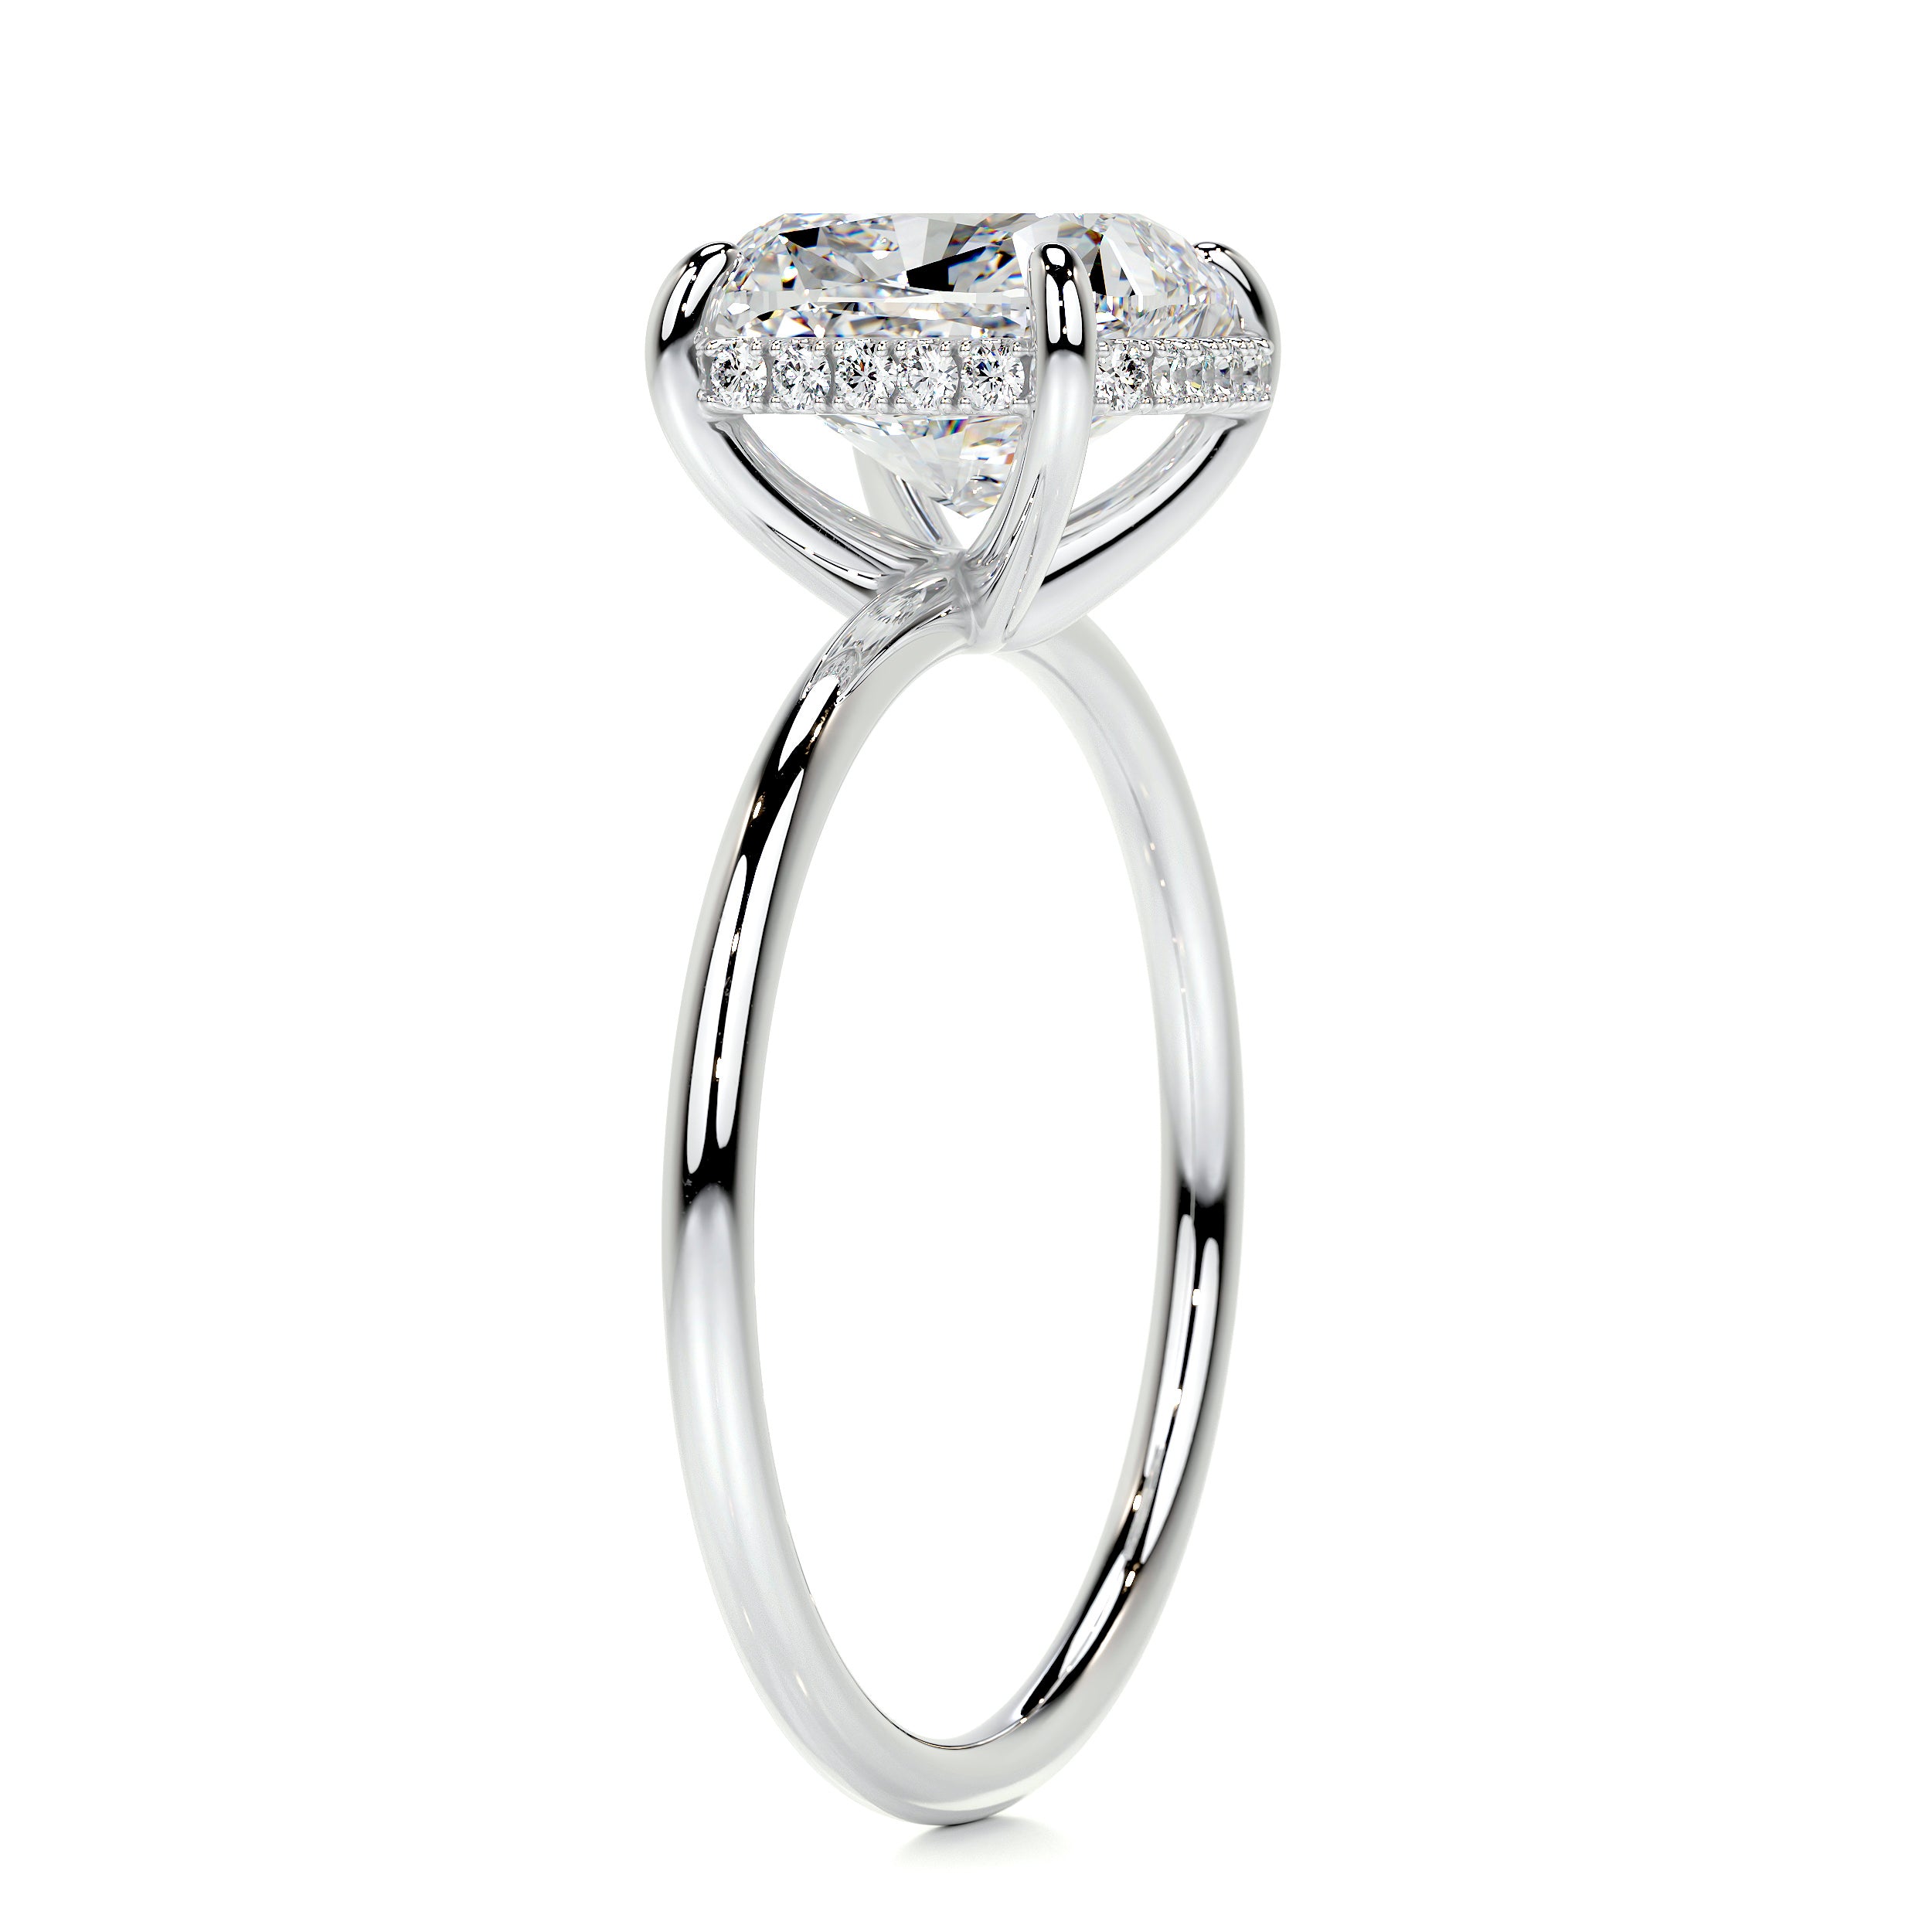 Priscilla Diamond Engagement Ring -14K White Gold